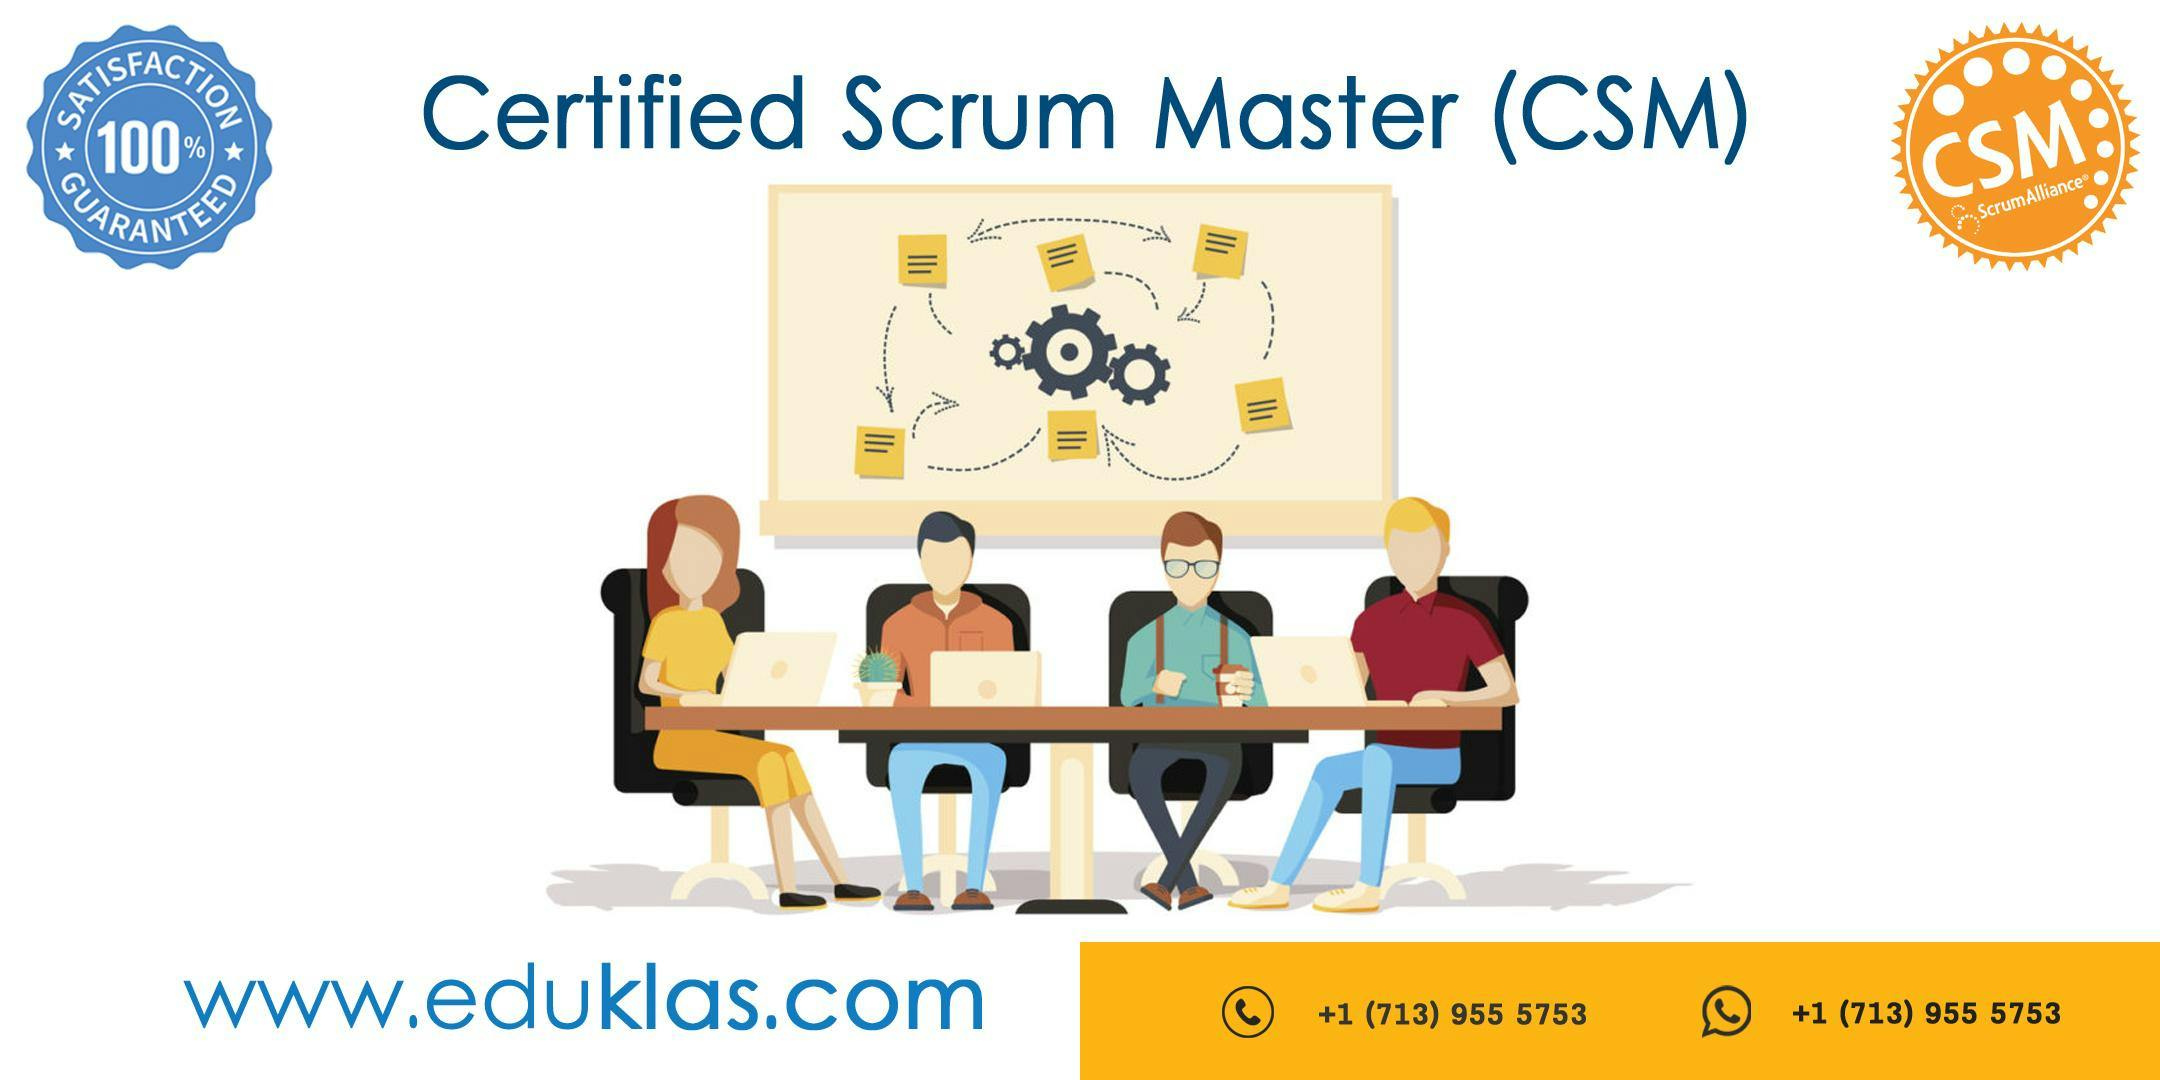 Scrum Master Certification | CSM Training | CSM Certification Workshop | Certified Scrum Master (CSM) Training in Glendale, AZ | Eduklas